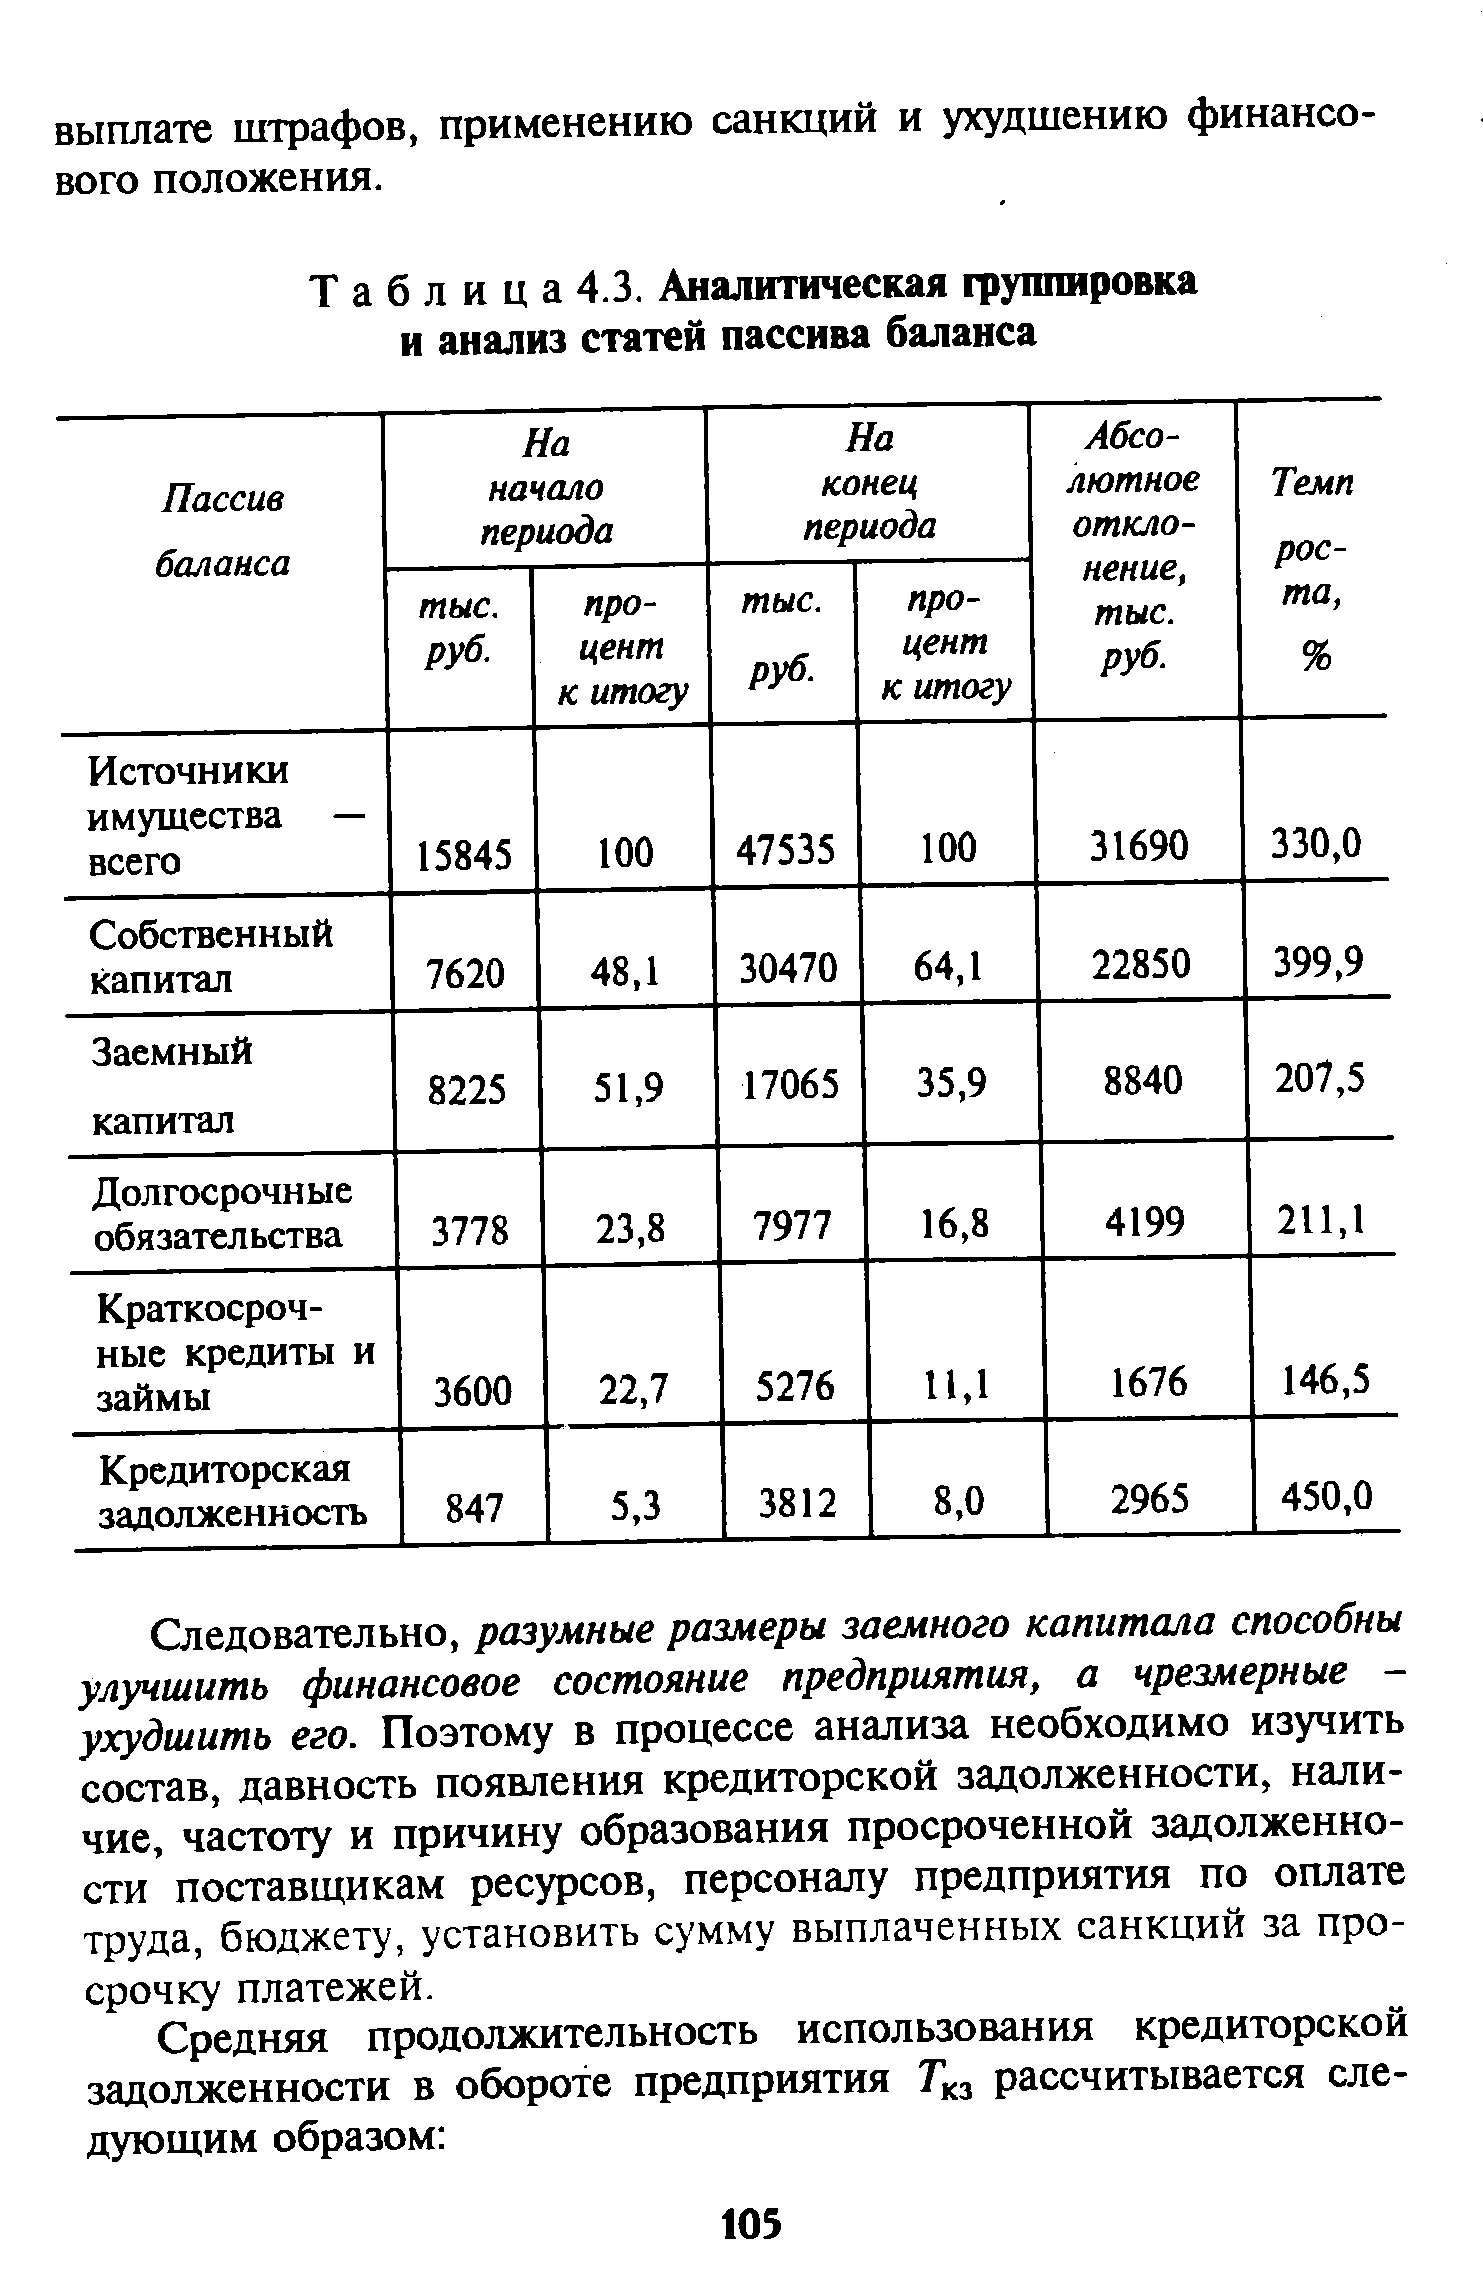 Таблица аналитических групп